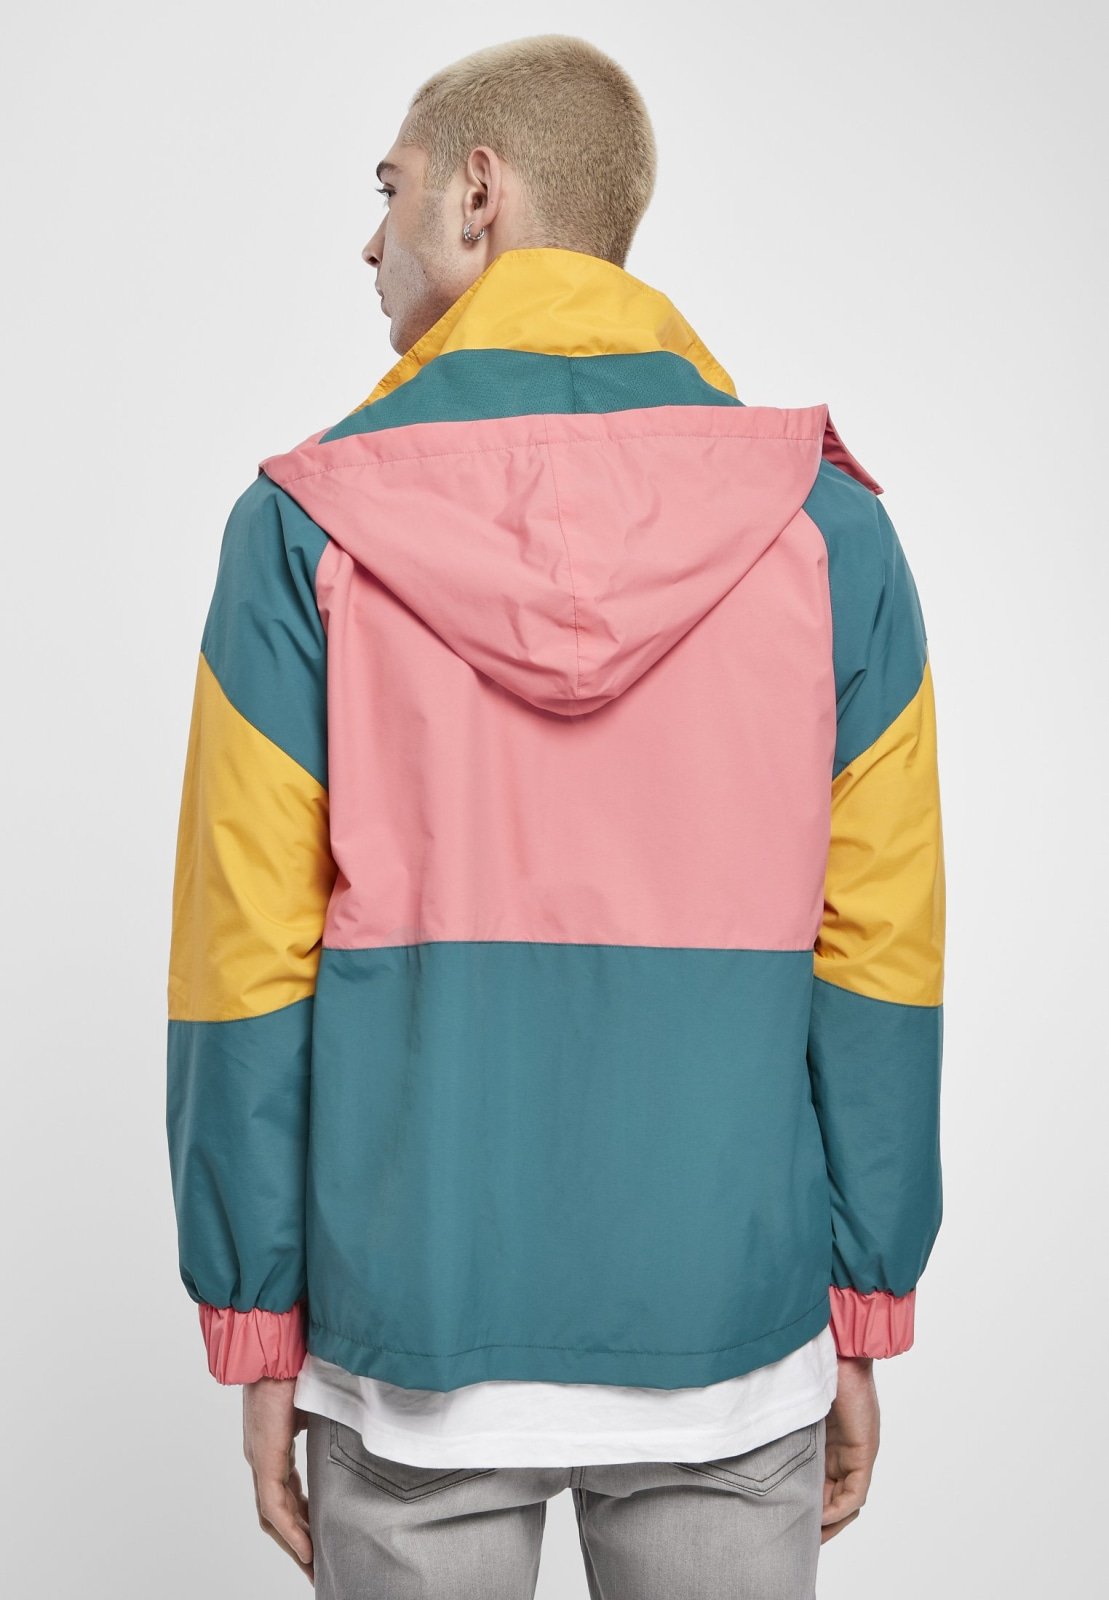 MCHPI Store Starter Multicolored Logo 80s Retro Vintage Jacket